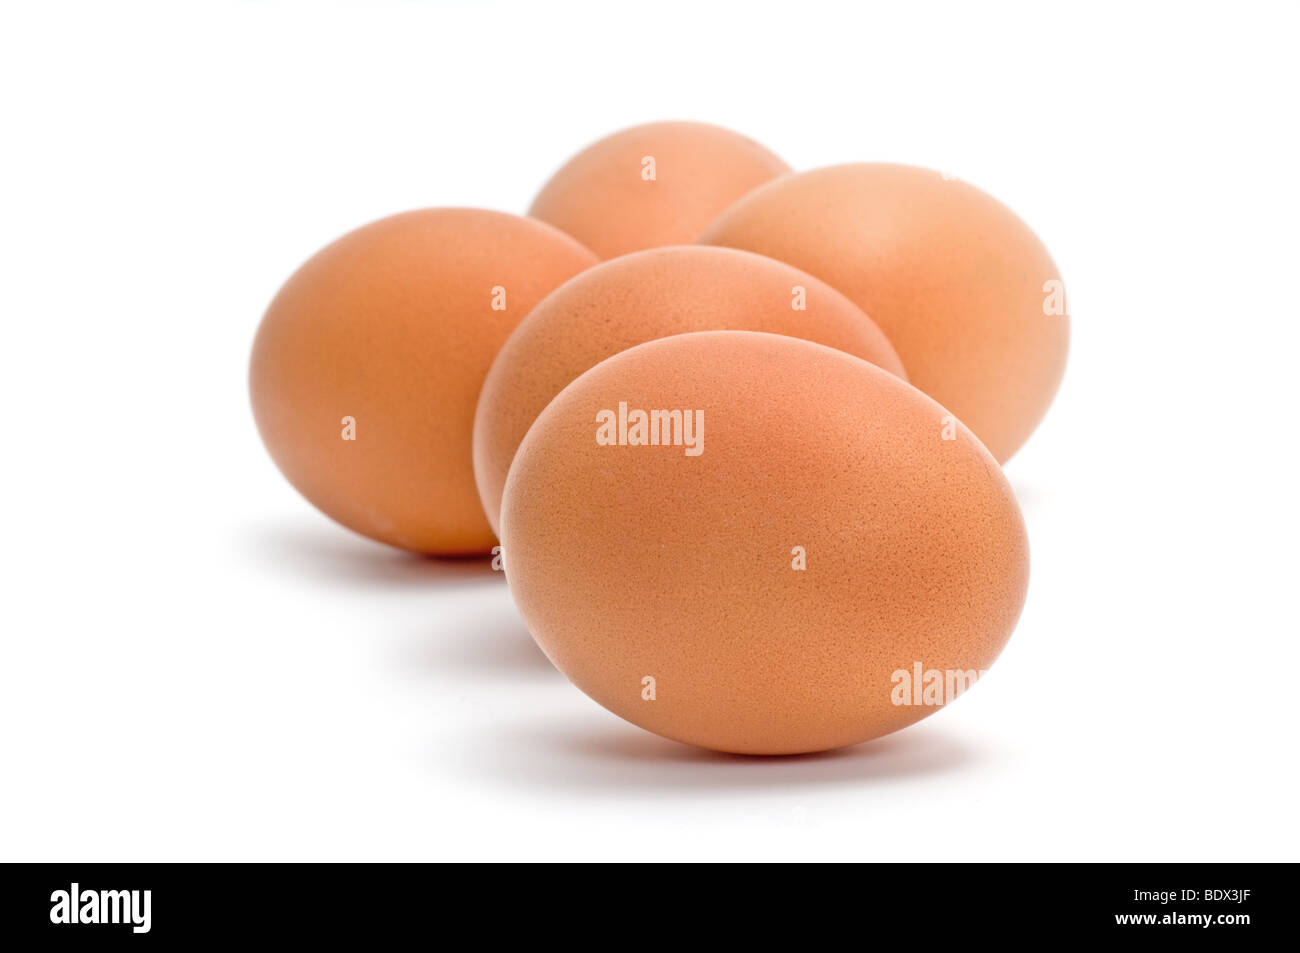 Grupo de huevos de pollo marrón aislado en blanco Foto de stock